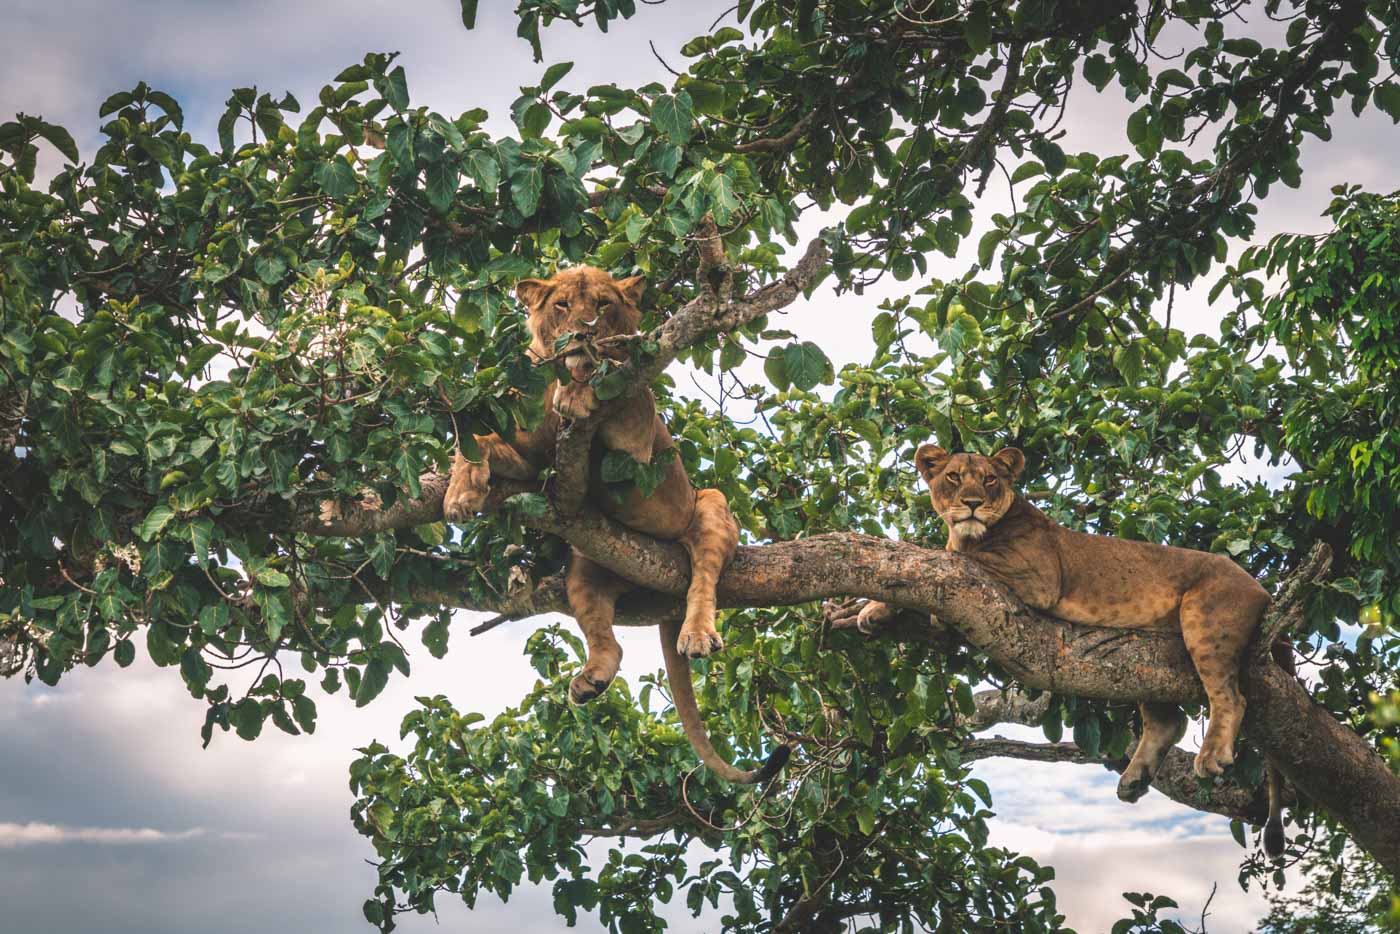 Tree climbing lions in Queen Elizabeth national Park